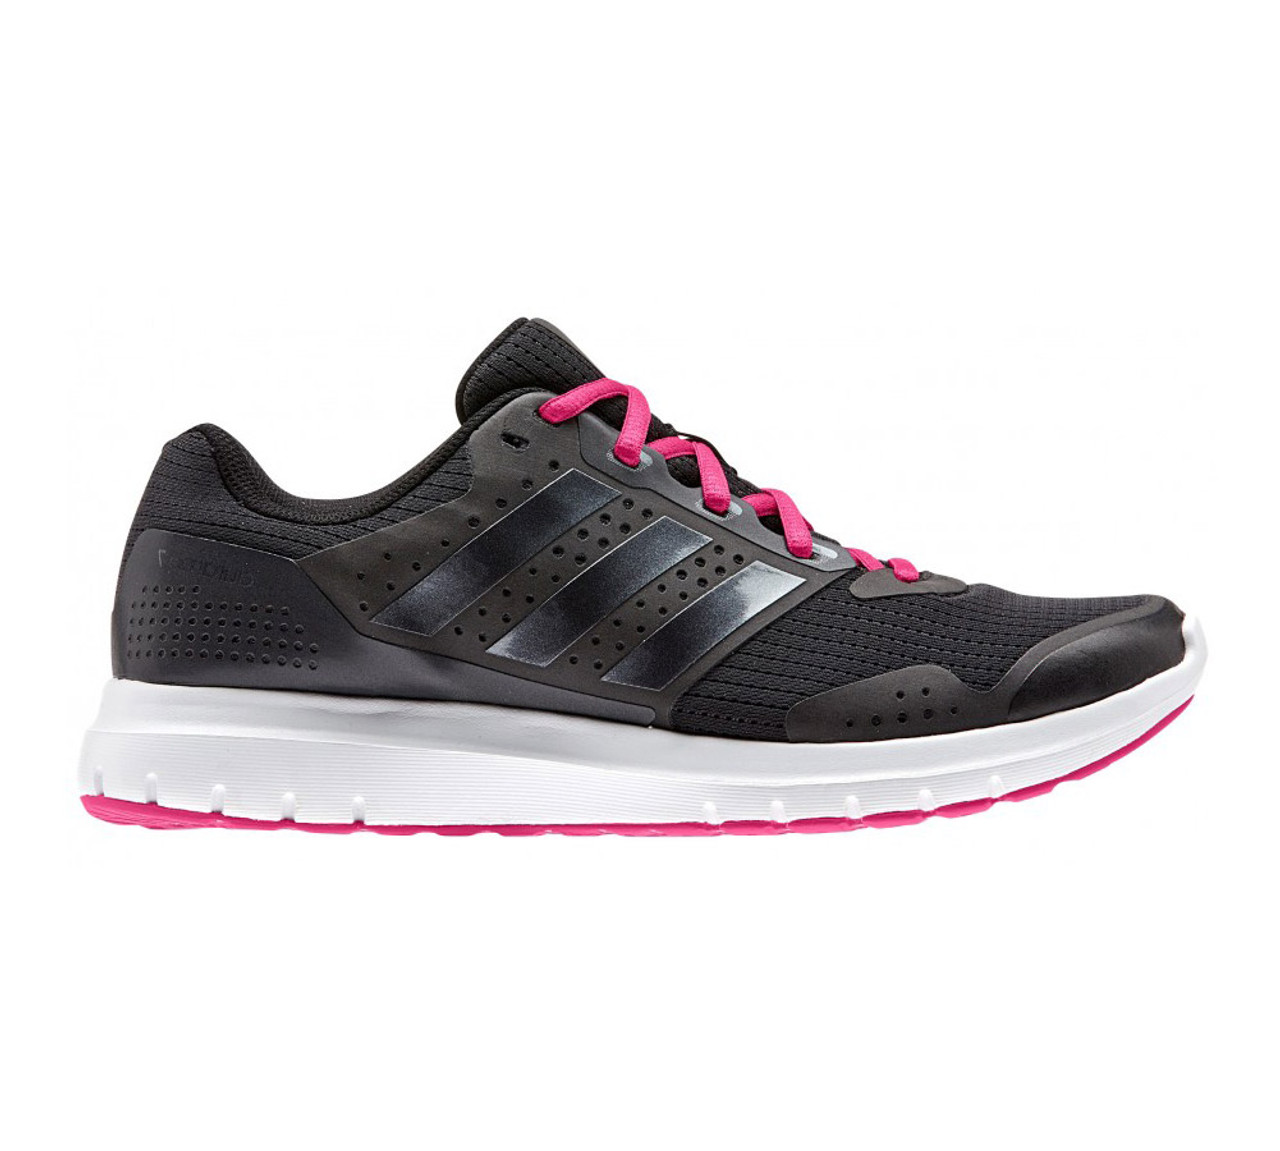 electo pintor límite Adidas Women's Duramo 7 Running Shoe - Black | Discount Adidas Ladies  Athletic Shoe & More - Shoolu.com | Shoolu.com